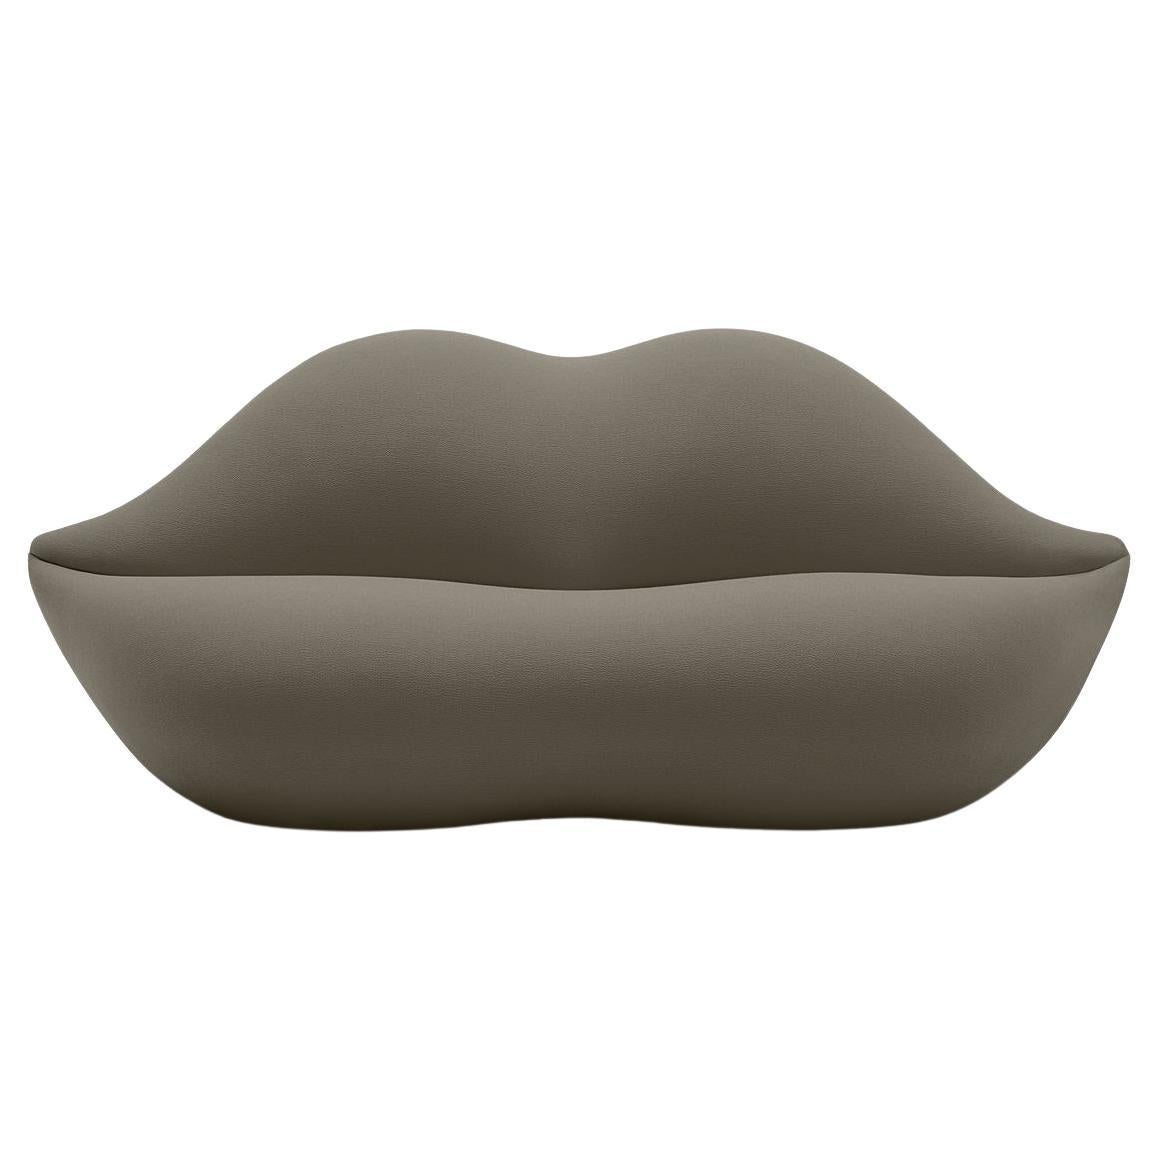 Gufram, Bocca Lip-Shaped Sofa, Walnut, by Studio 65